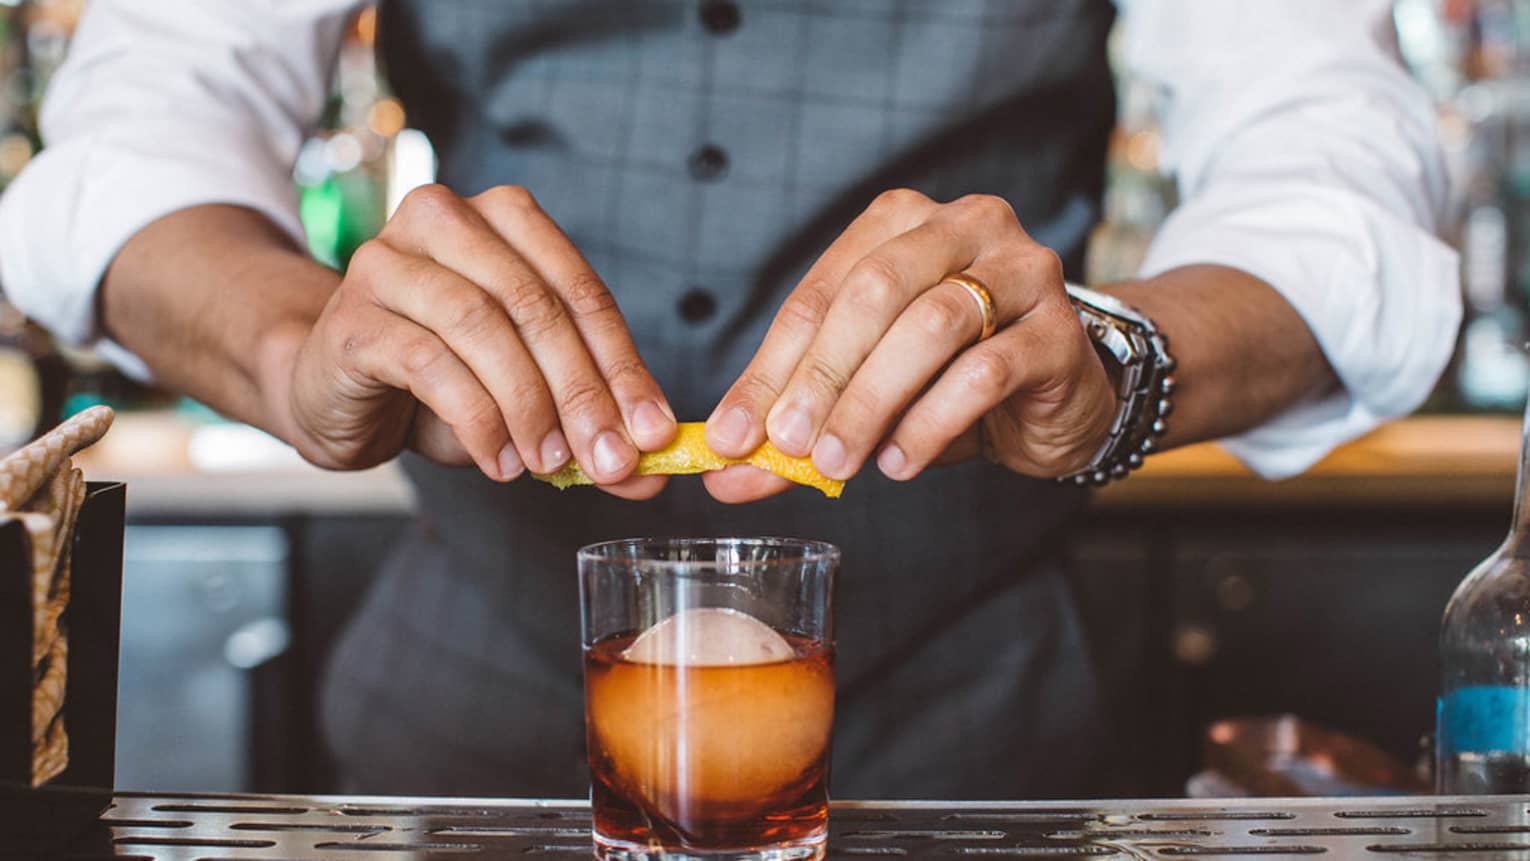 A bartender garnishing a cocktail.